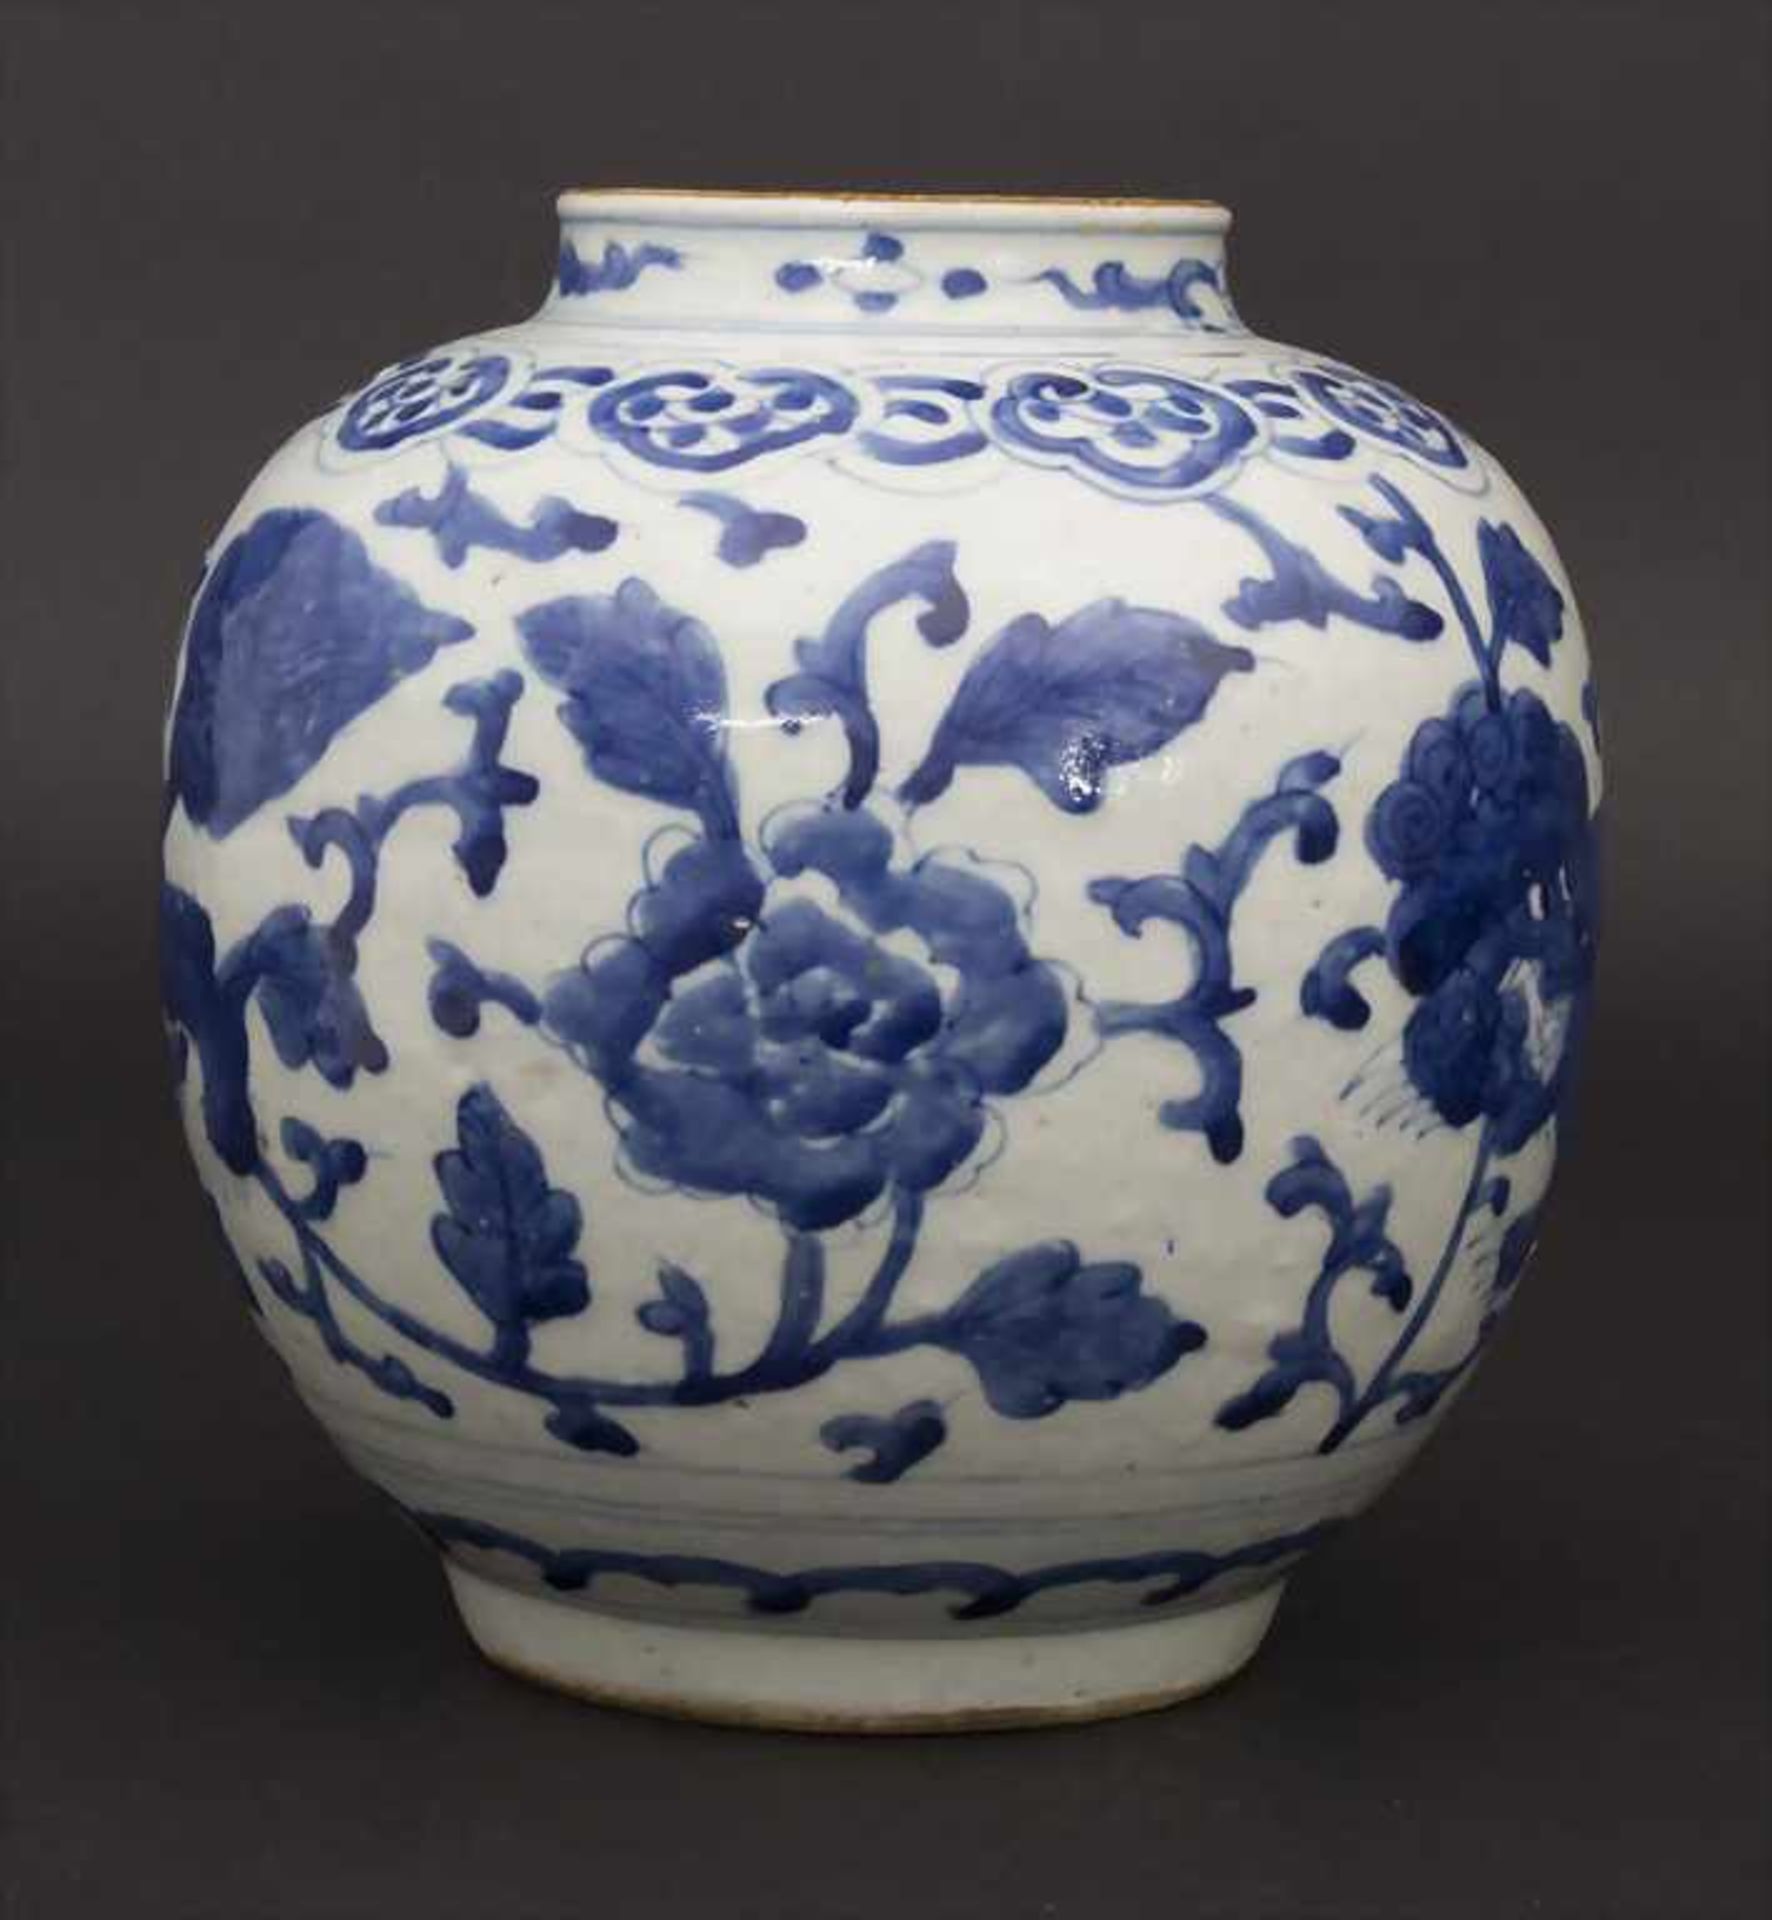 Schultertopf mit unterglasurblauer Malerei, Qing Dynastie, China, 18./19. Jh. - Image 5 of 11